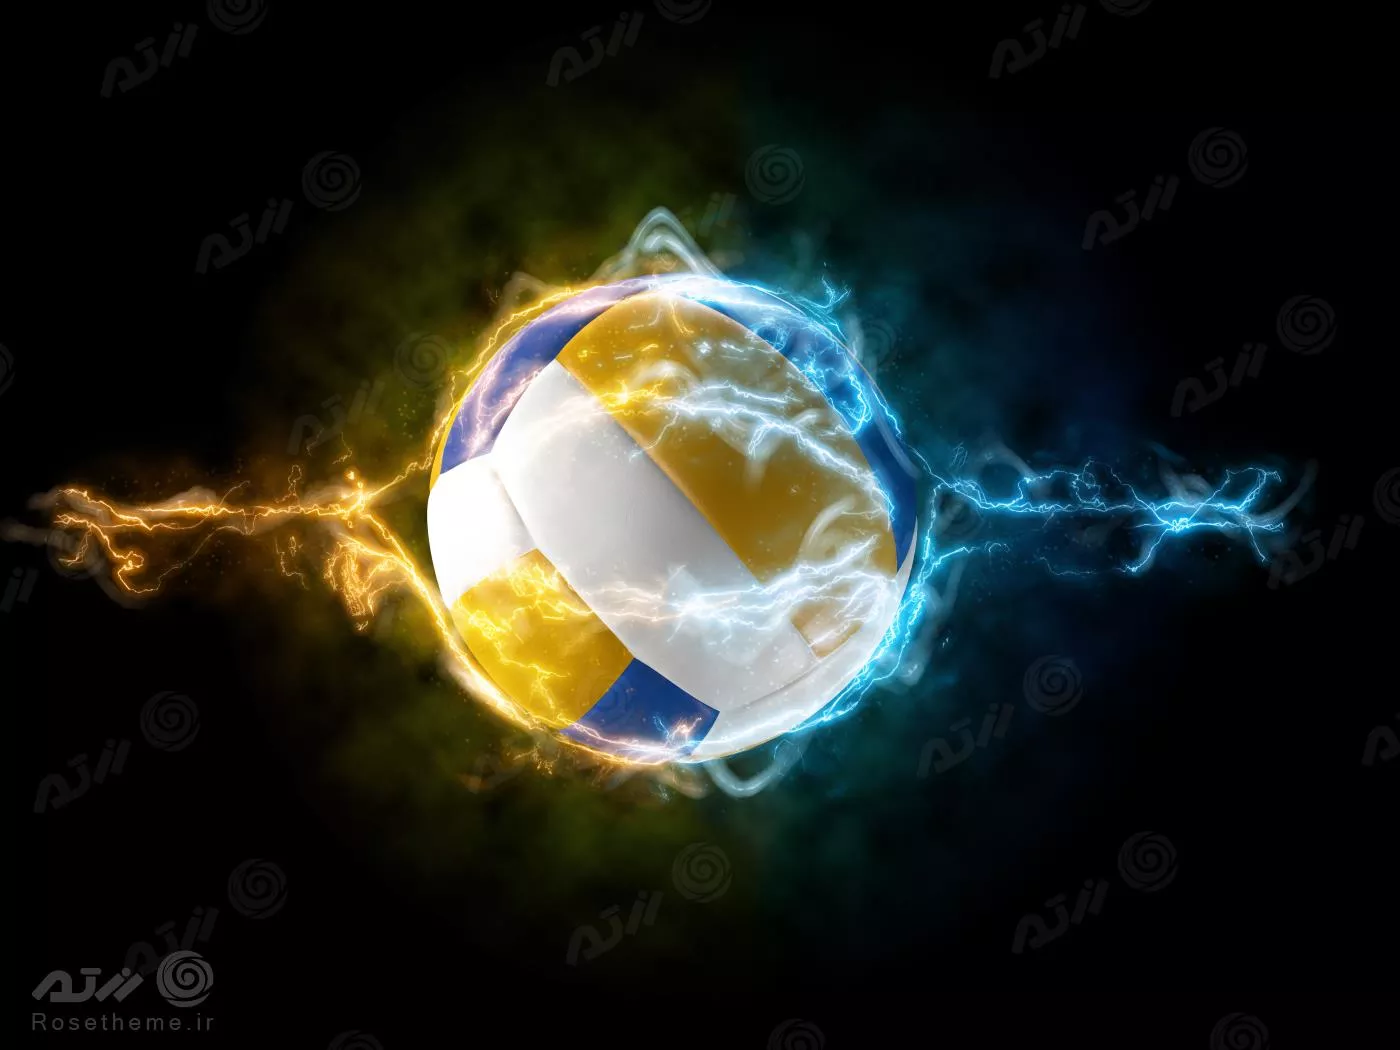 عکس باکیفیت JPG والیبال شامل توپ والیبال با افکت جذاب 24431